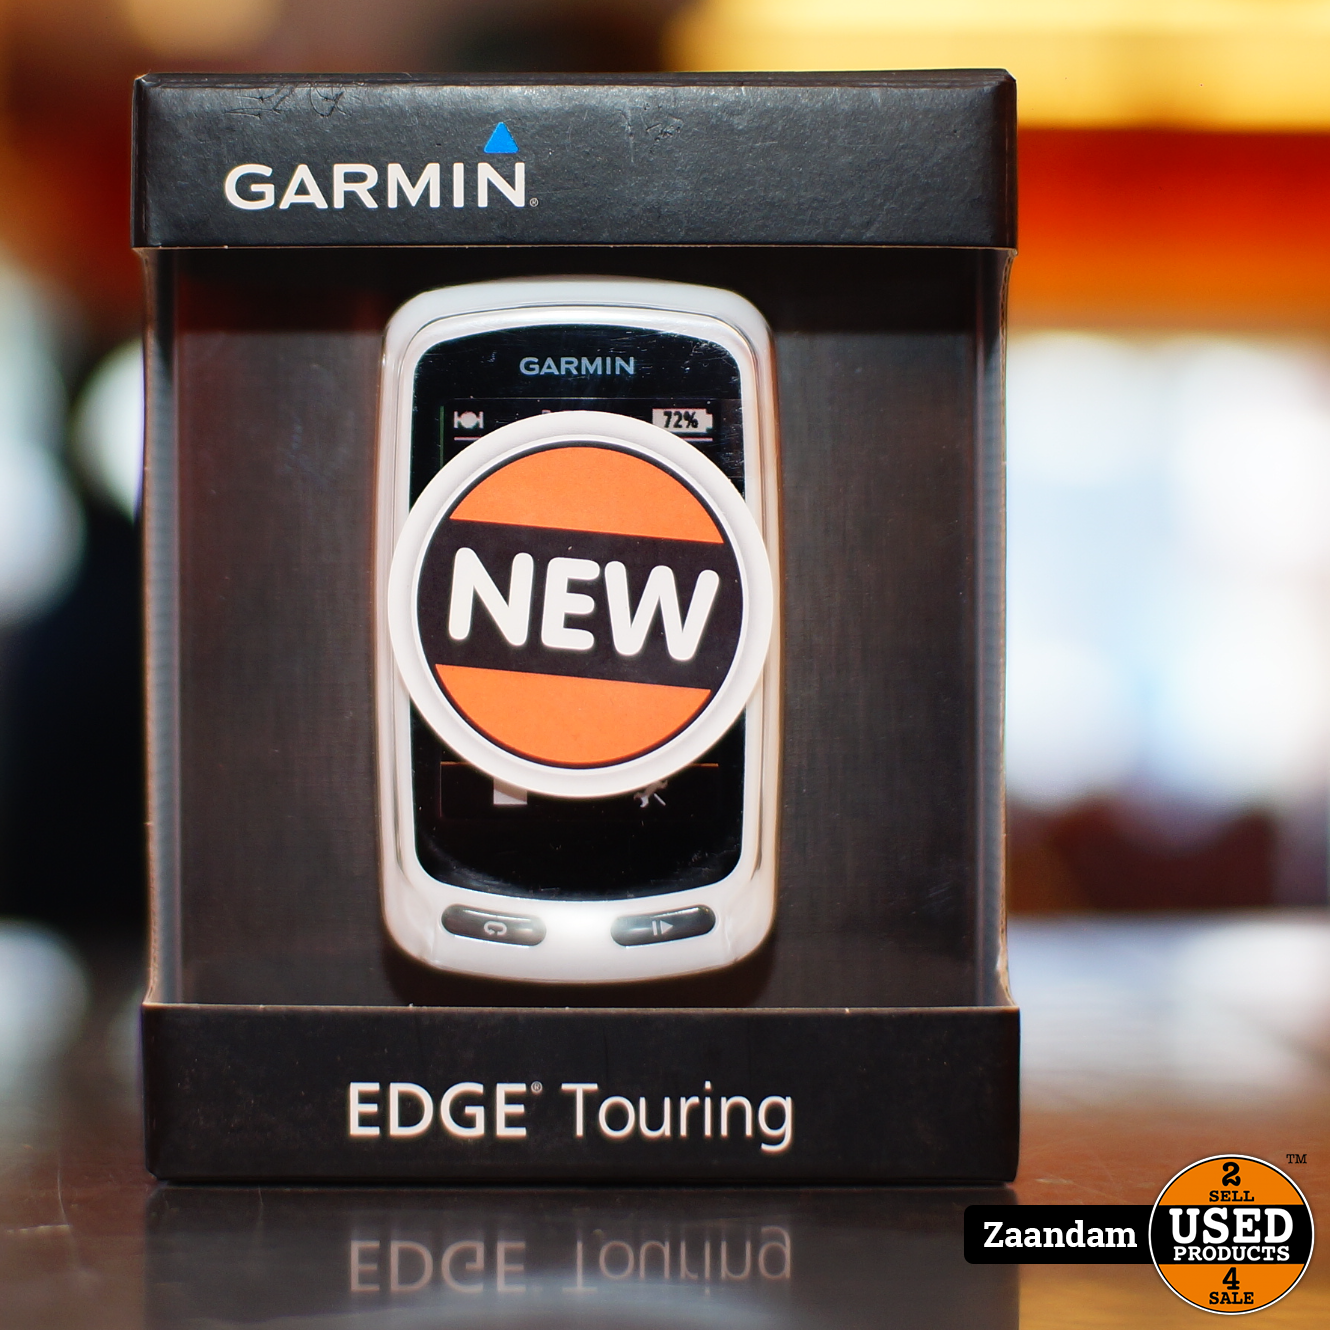 Garmin Edge Touring Fiets Navigatie | Europa | Nieuw in - Used Products Zaandam